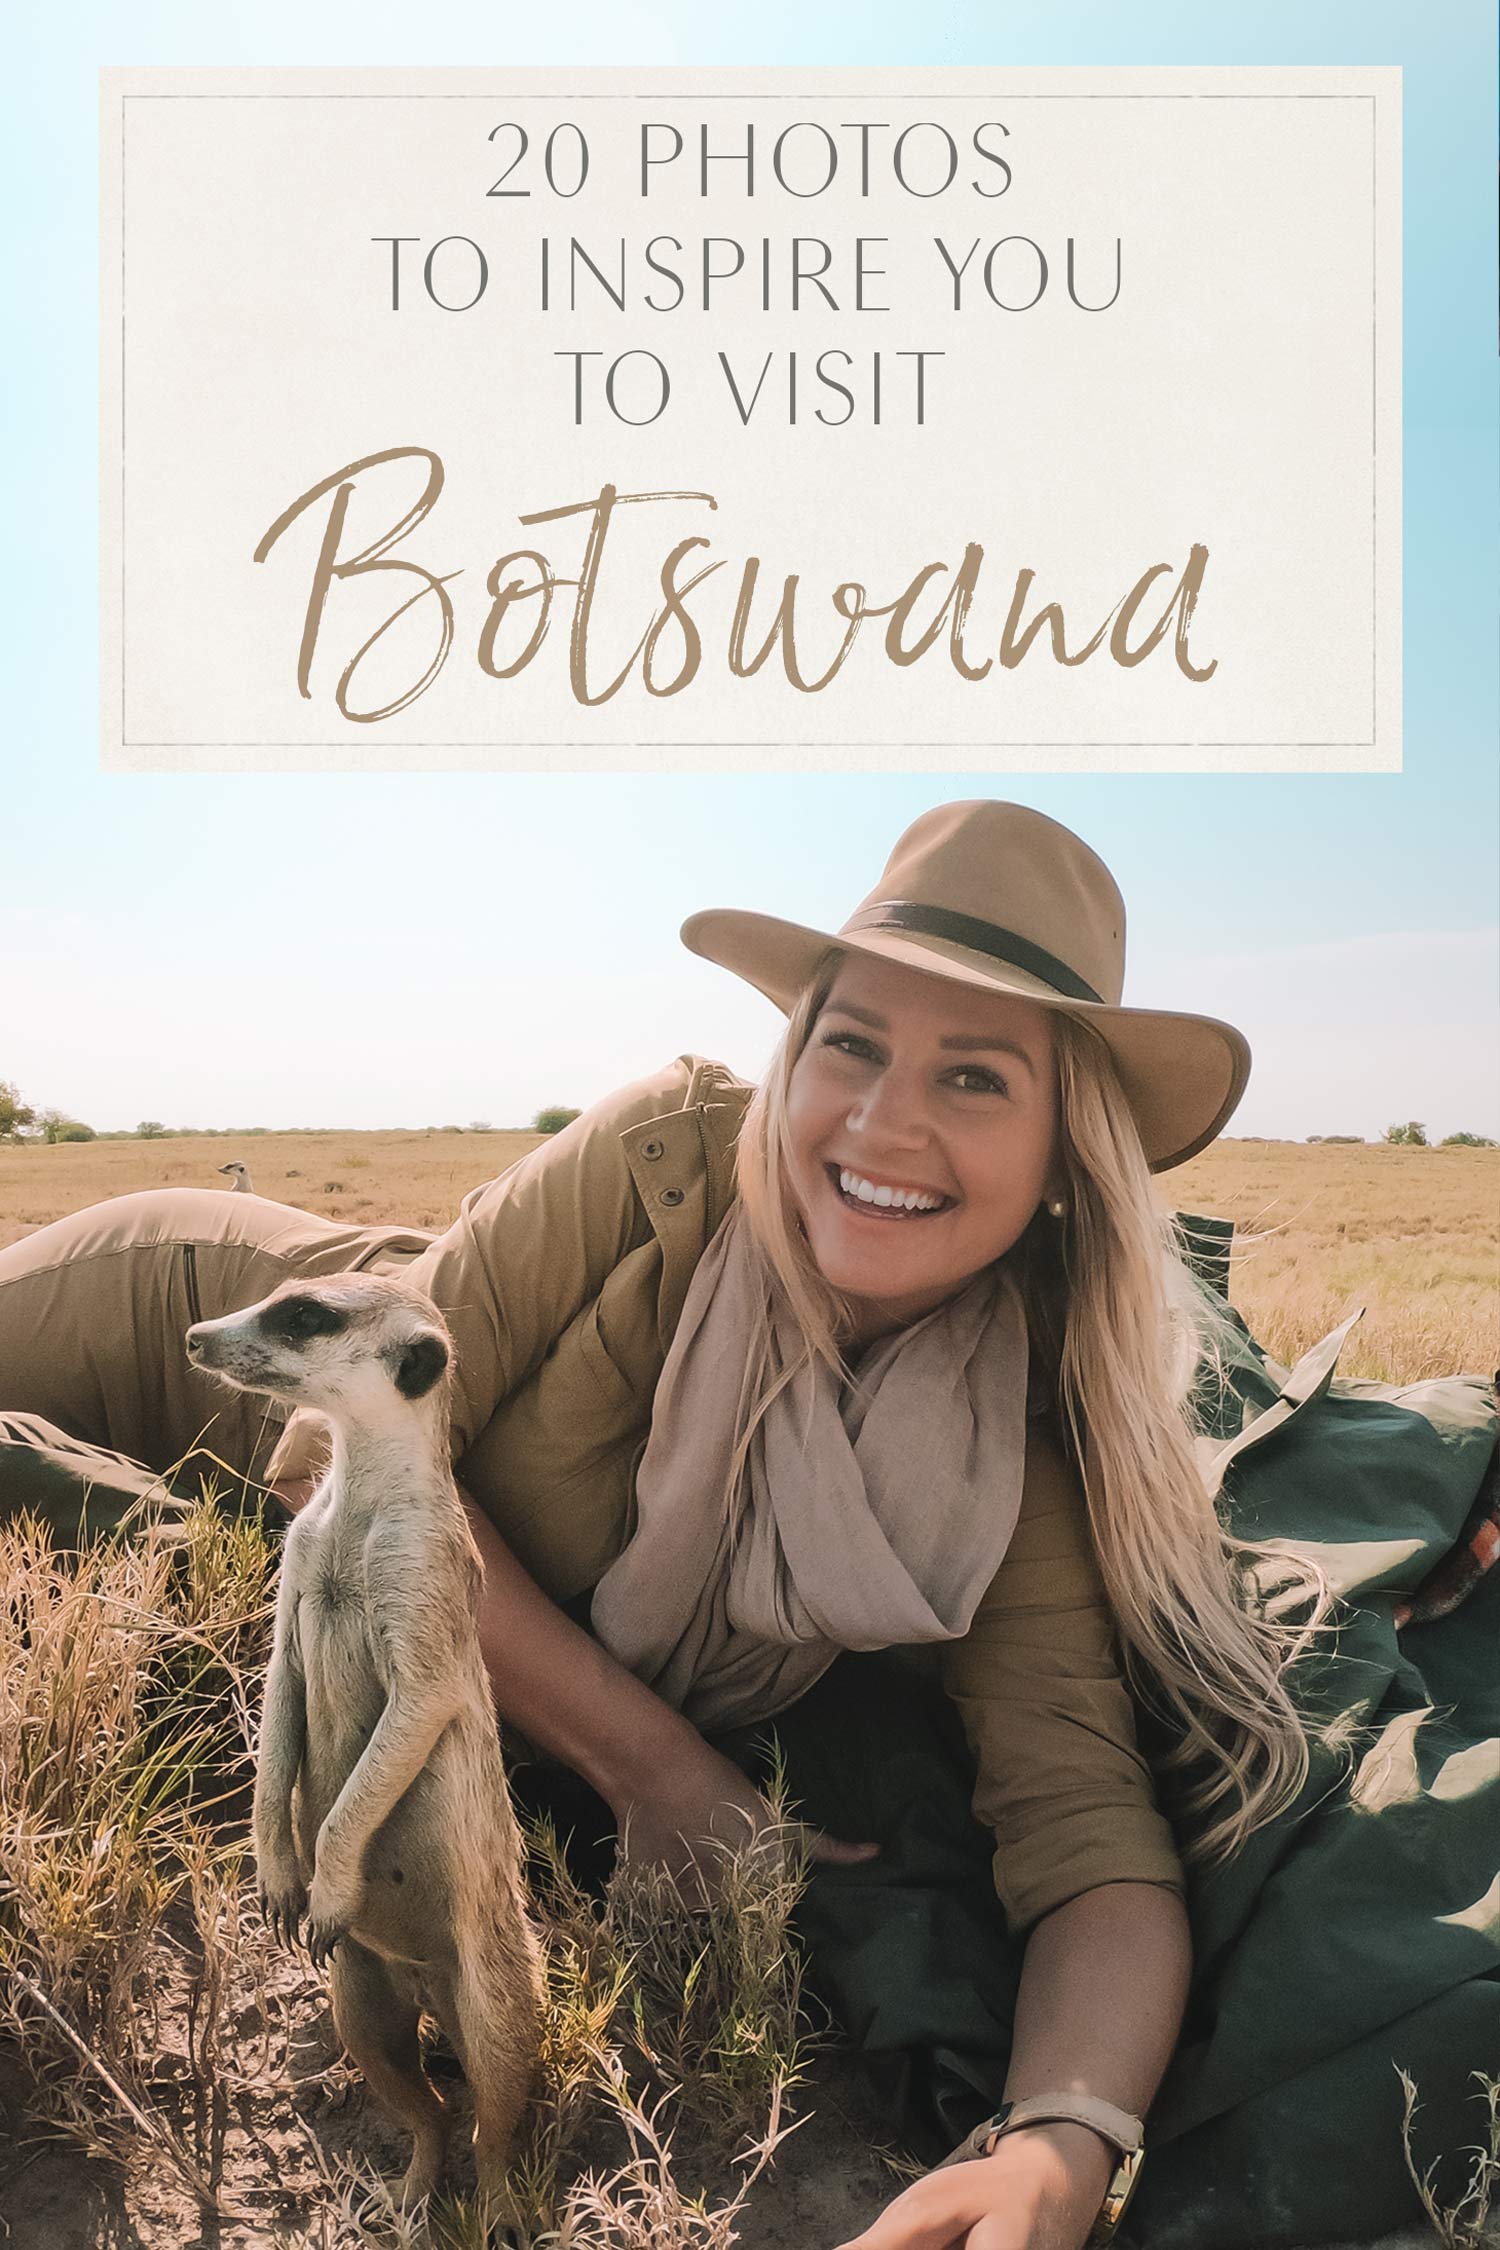 20 Photos to Inspire You to Visit Botswana